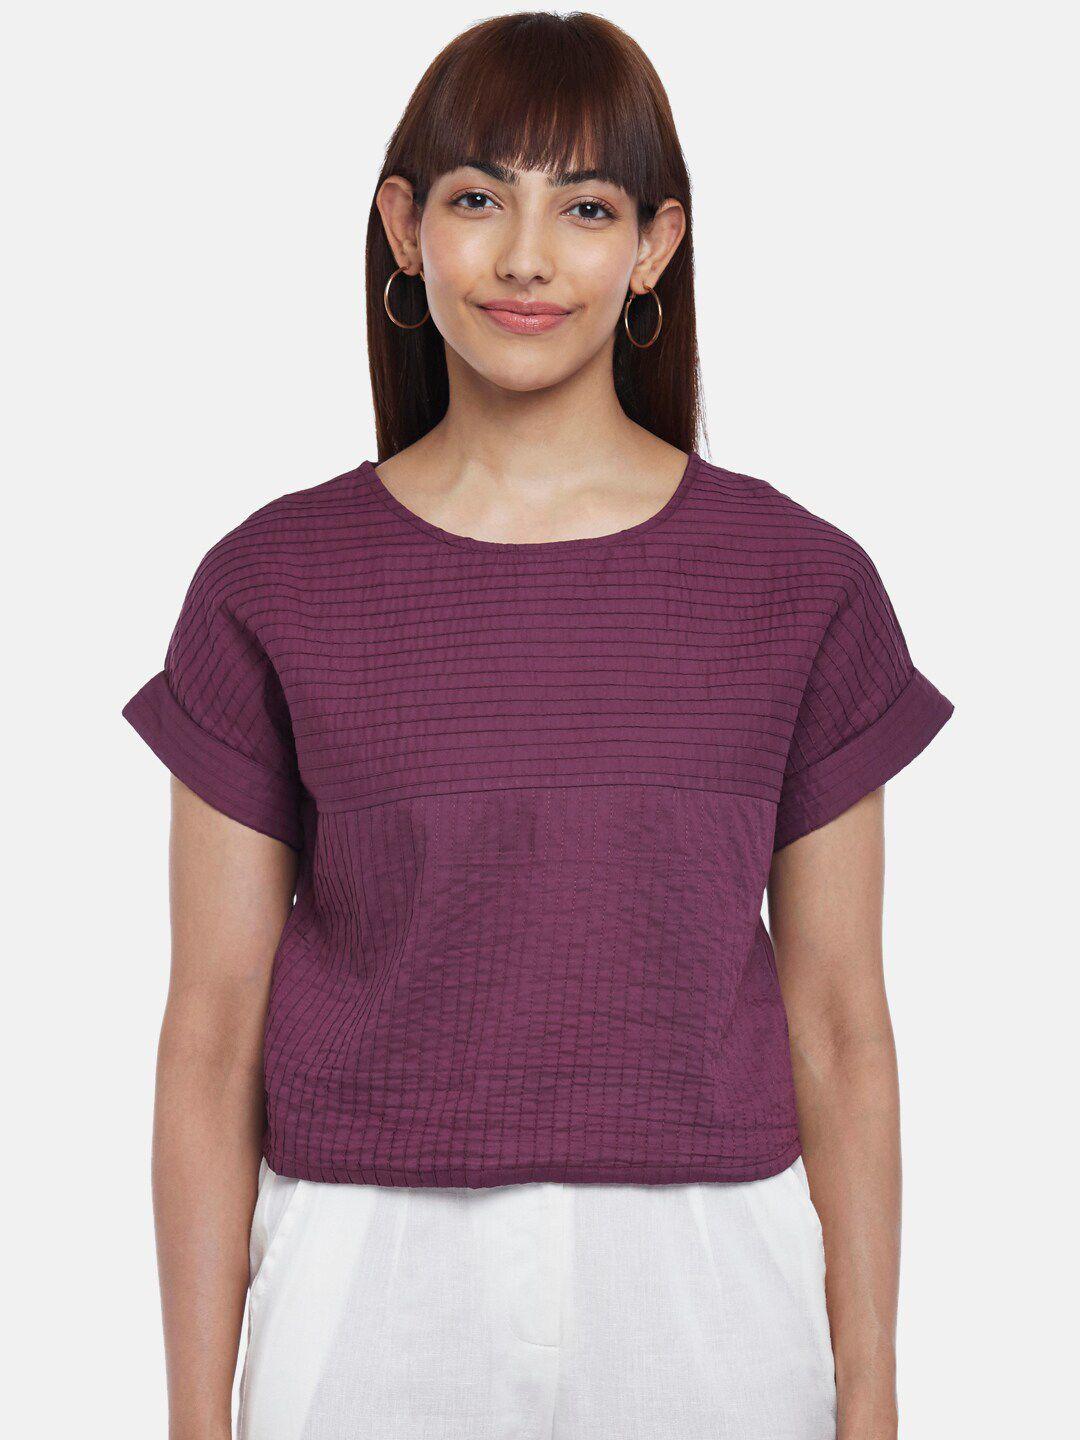 akkriti by pantaloons women purple extended sleeves top